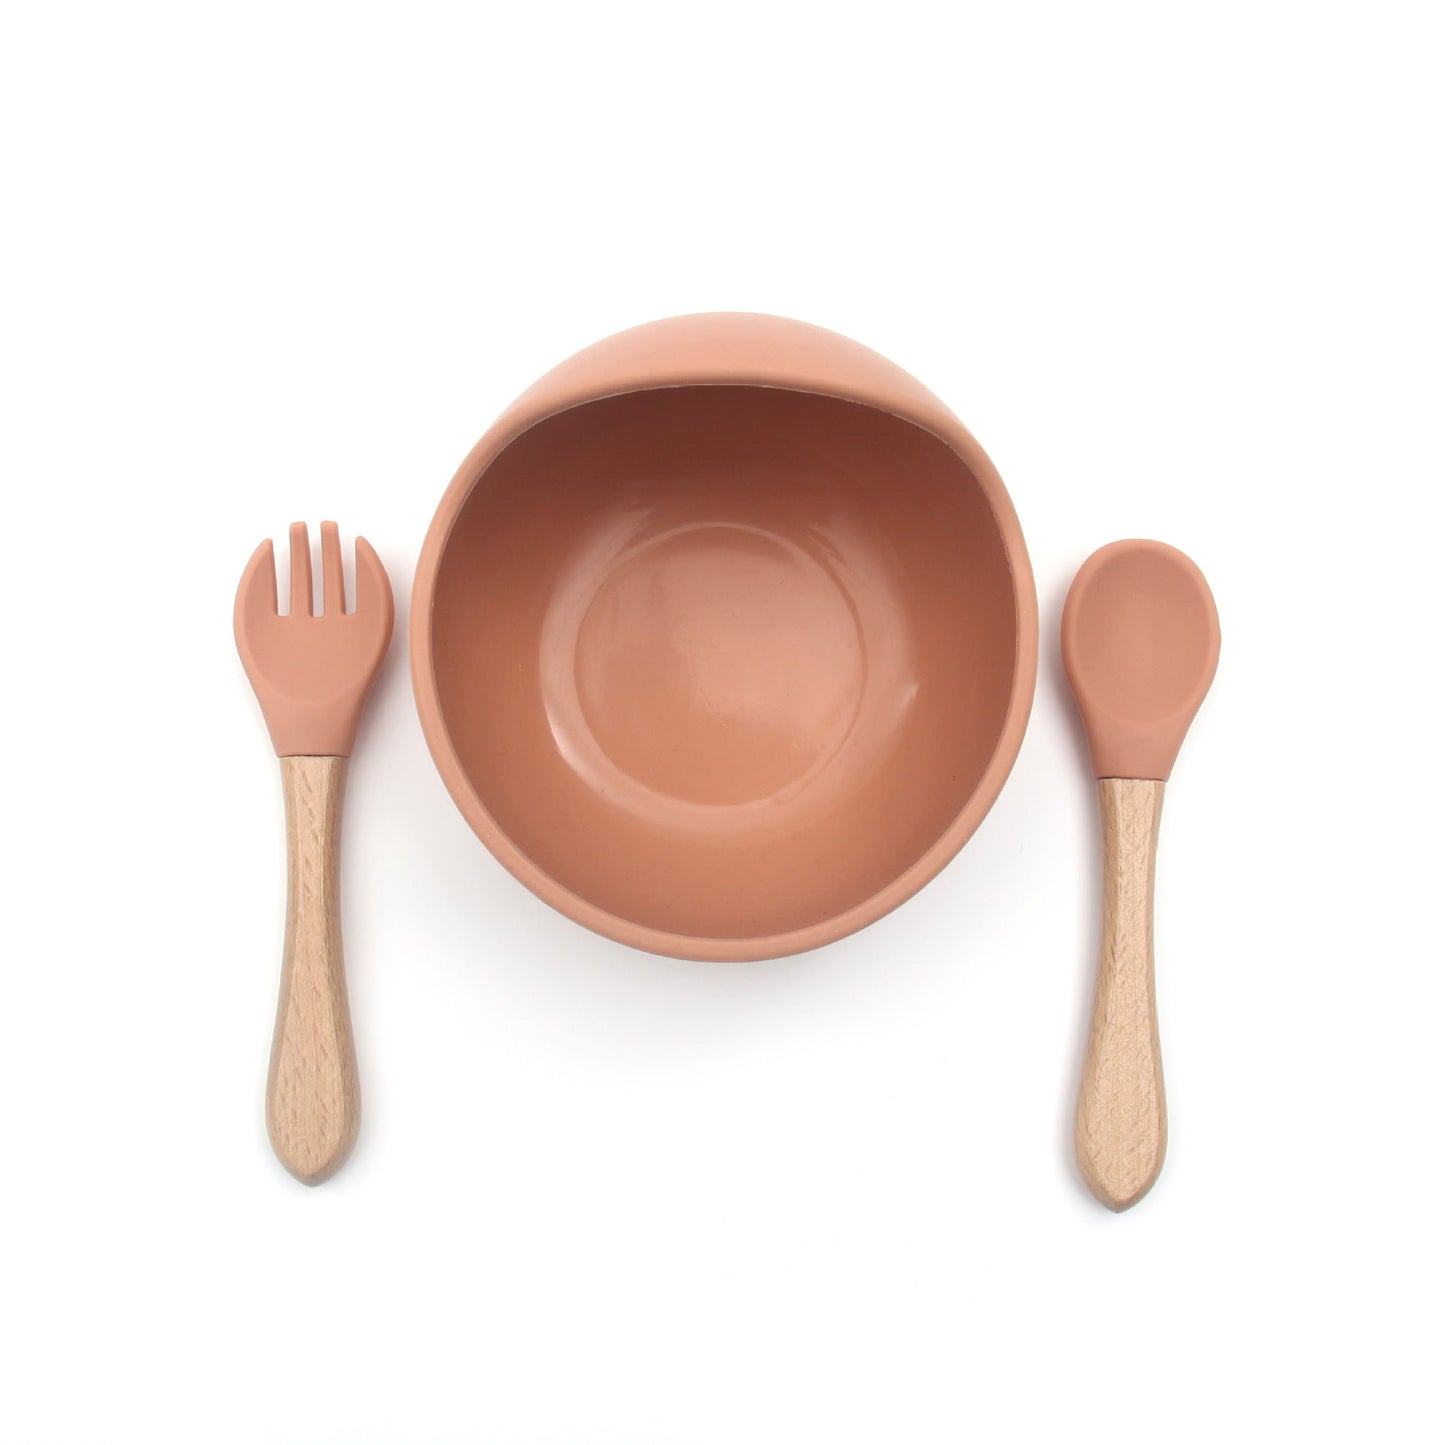 Pastel Orange Tableware 3pc Set - includes bowl, fork & spoon